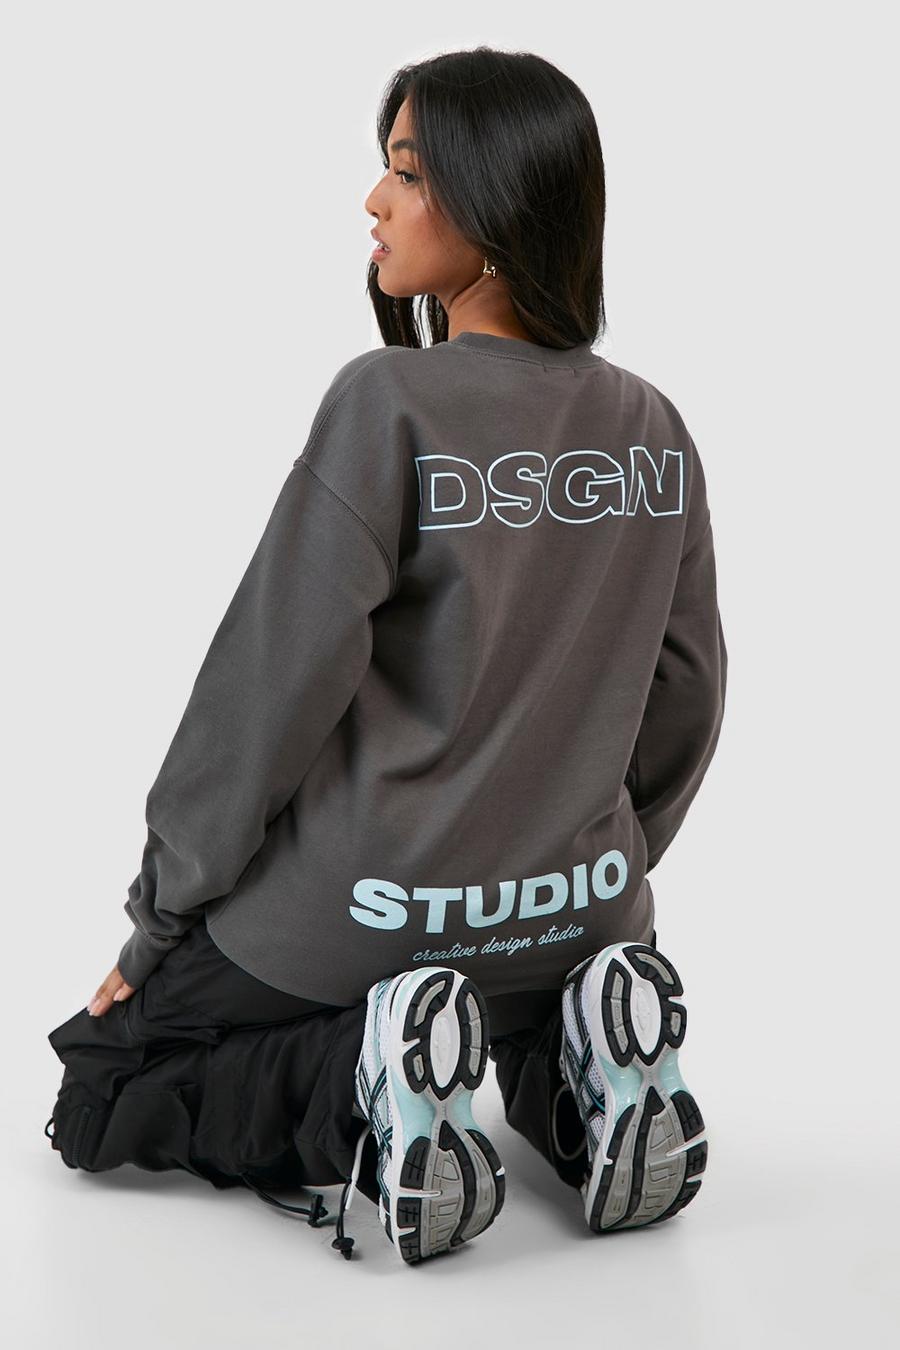 Charcoal Petite Dsgn Studio Sweatshirt med tryck på ryggen